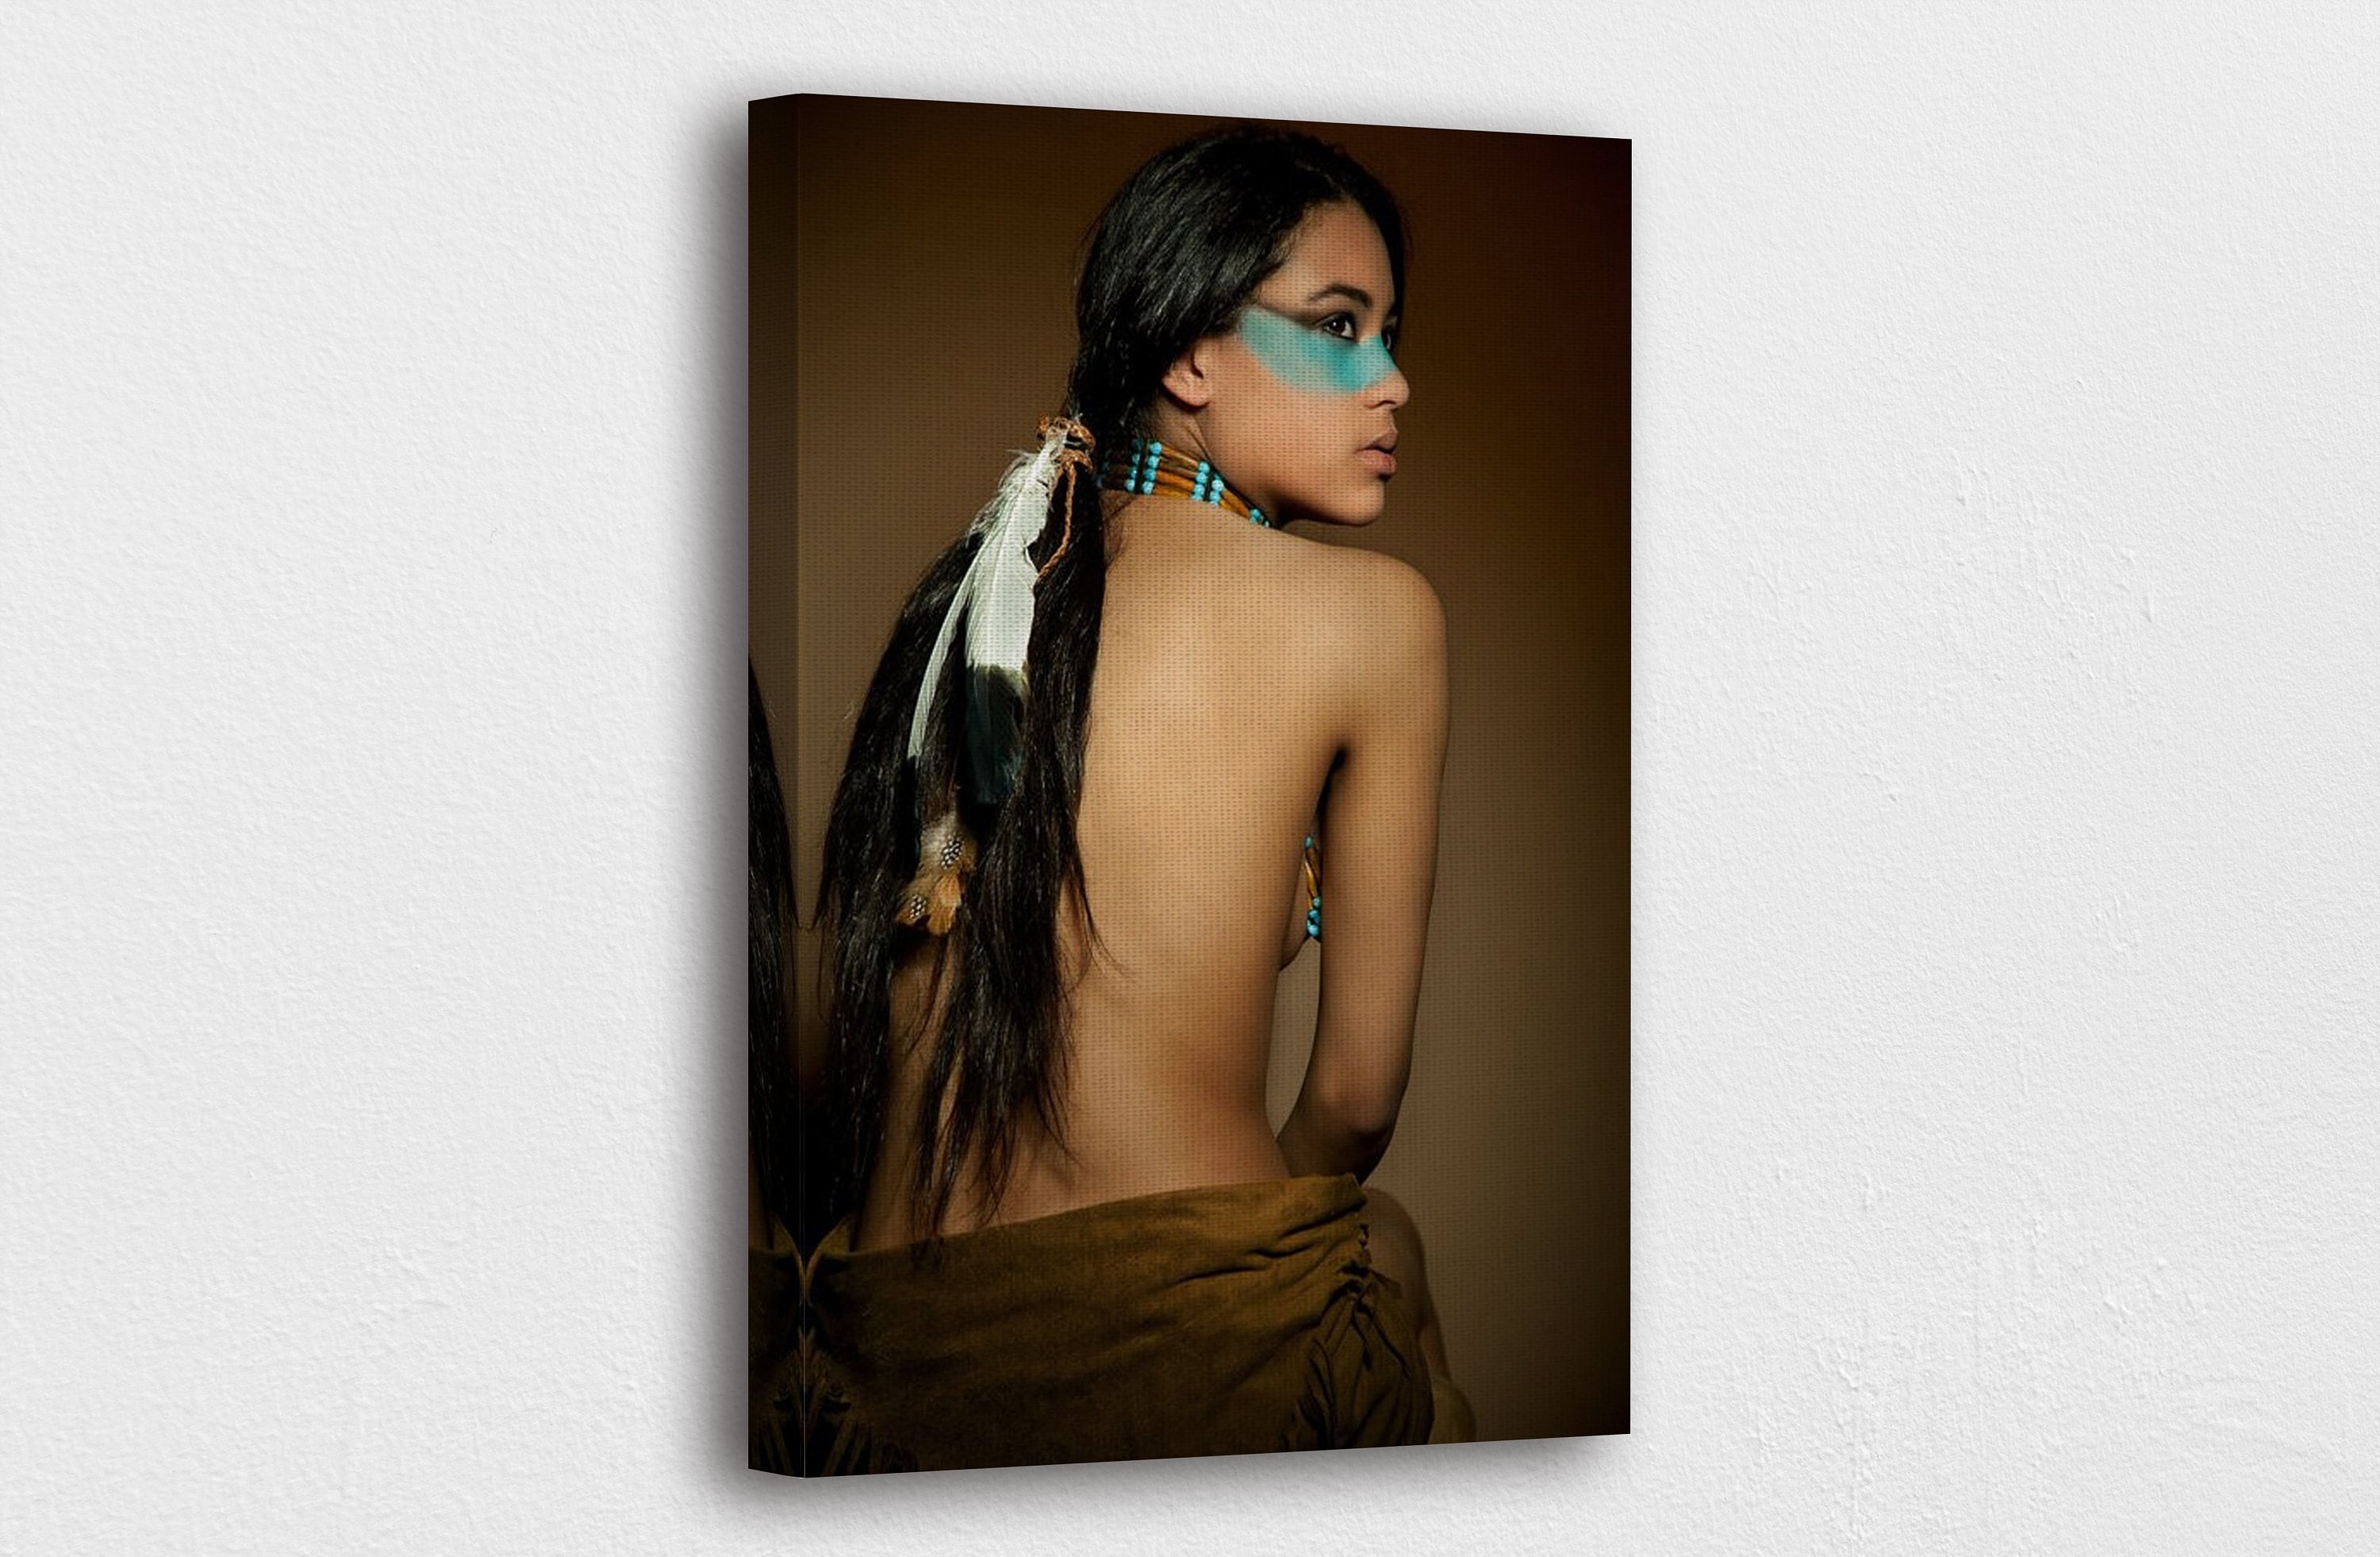 craig rockhold add photo native american nude pics